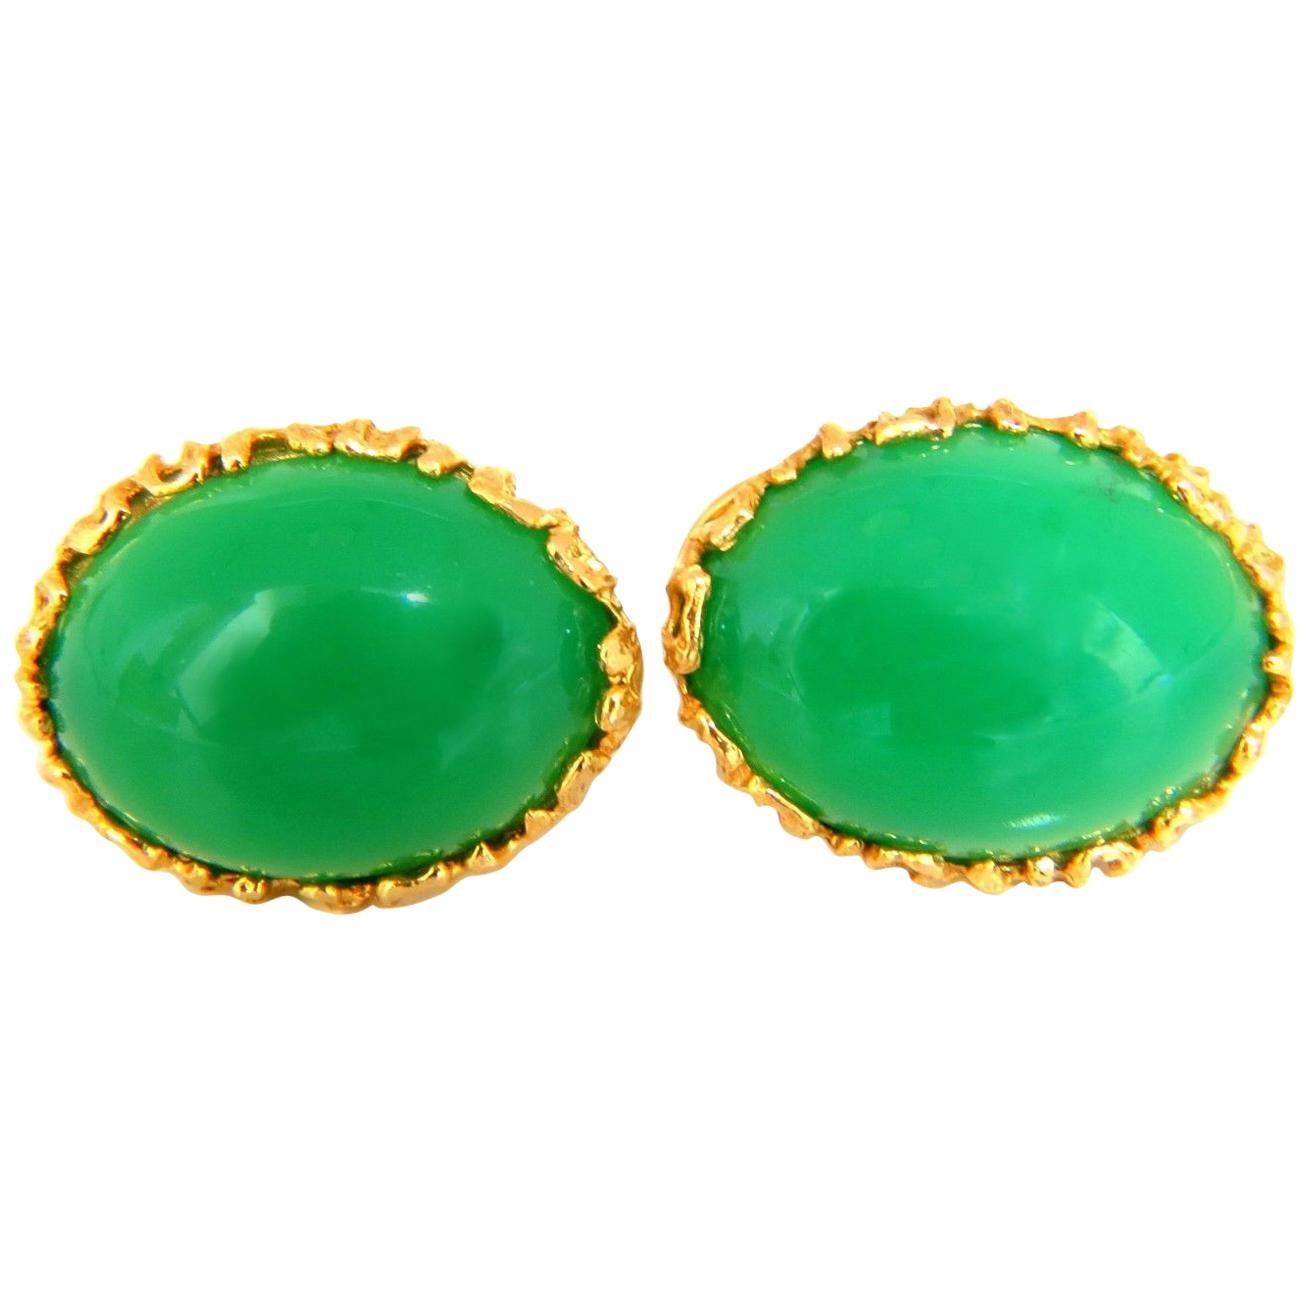 24 Carat Green Marcasite Earring Clips 14 Karat Gold